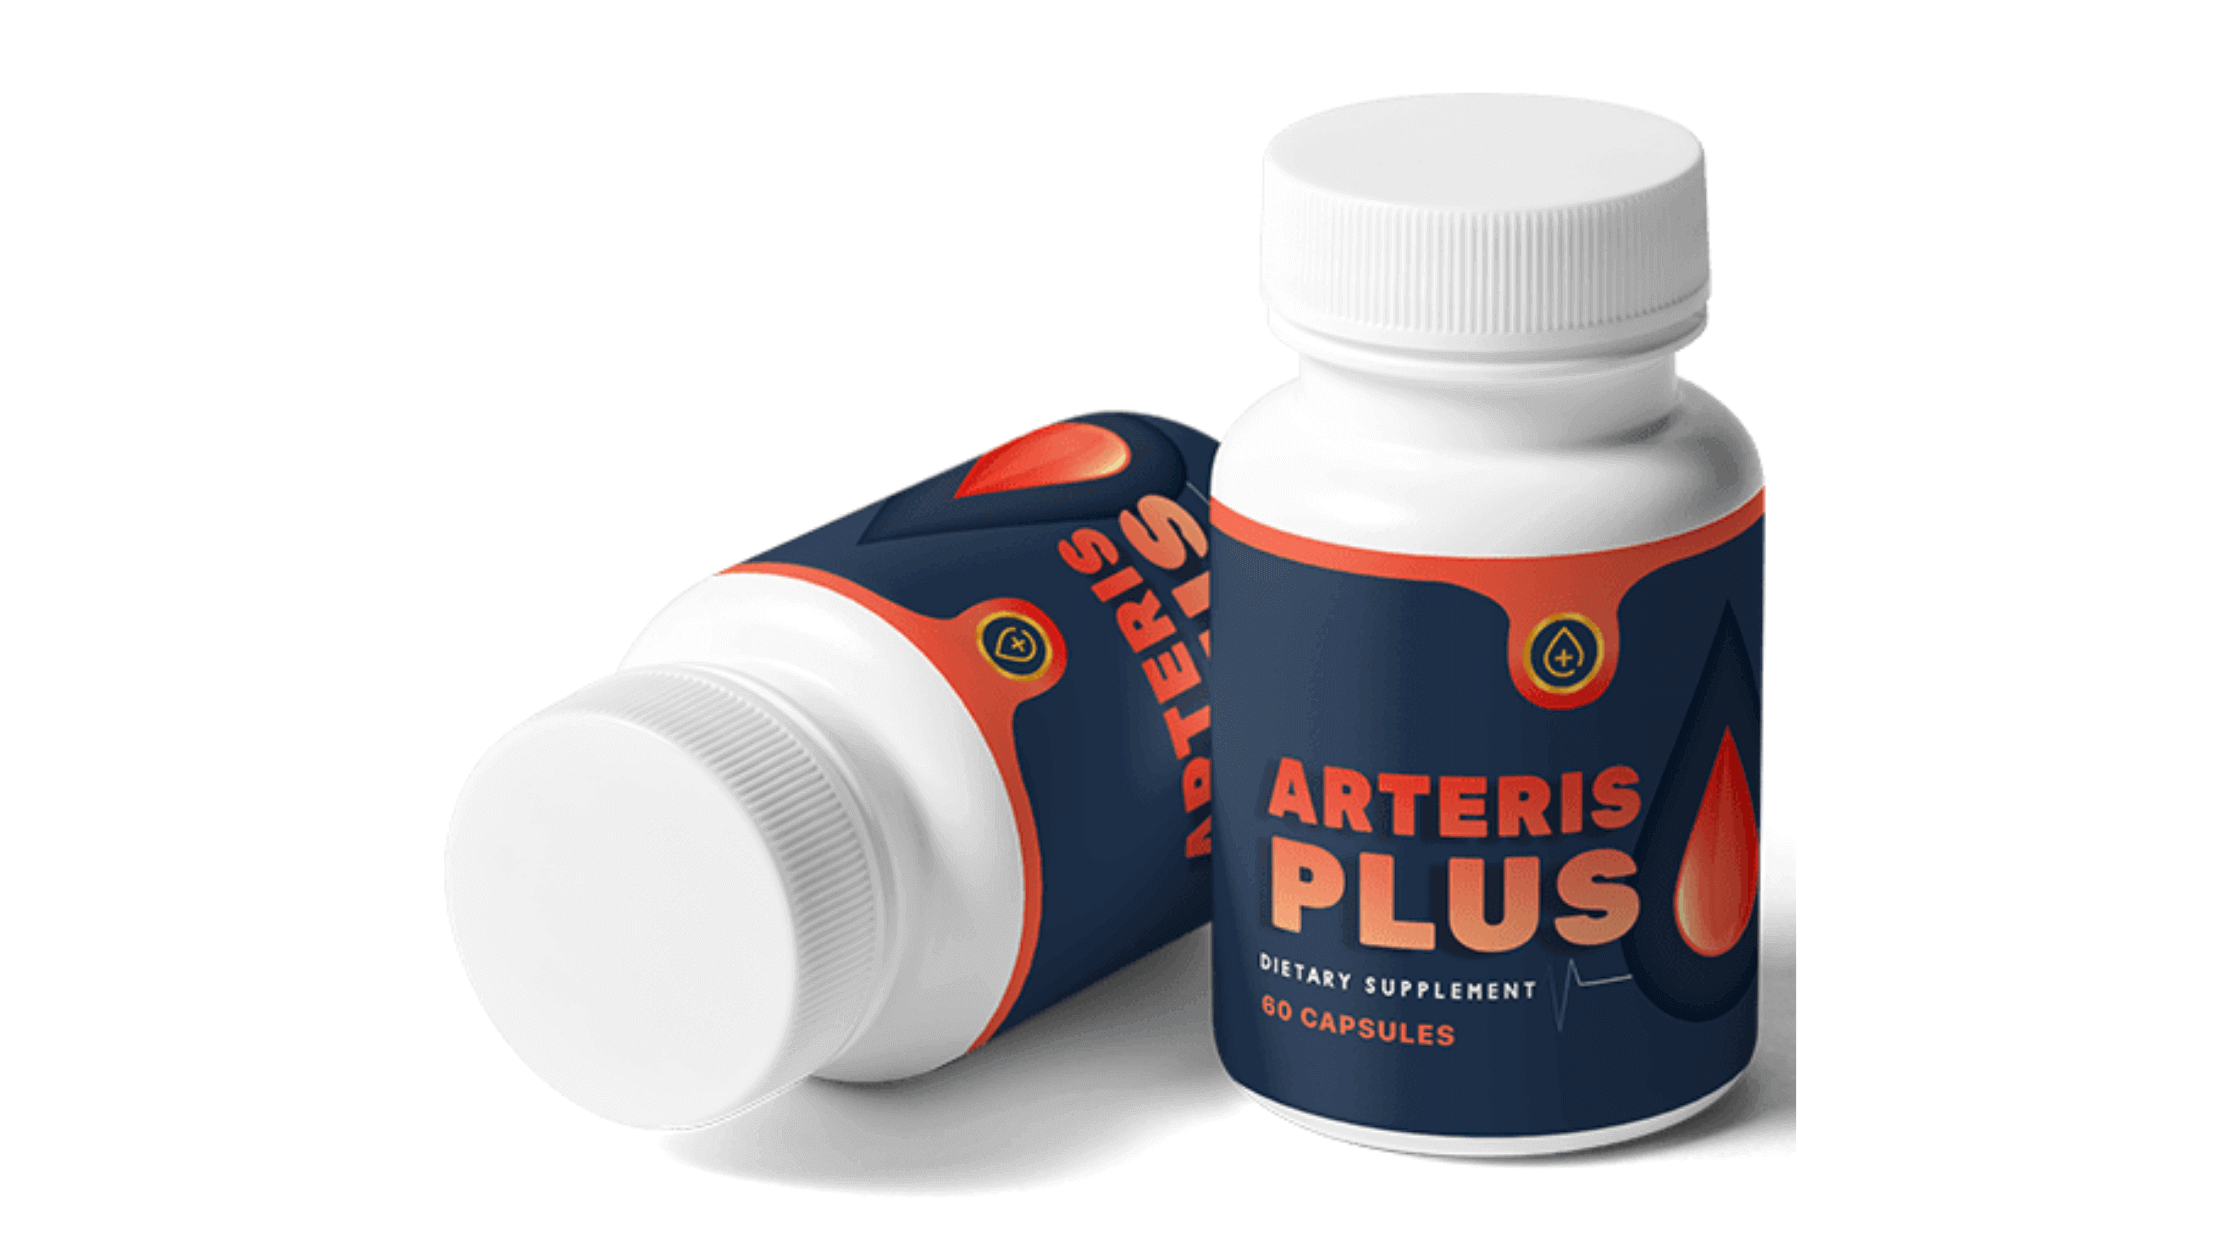 Arteris Plus REVIEWs - A Worthy Blood Pressure Support Formula?